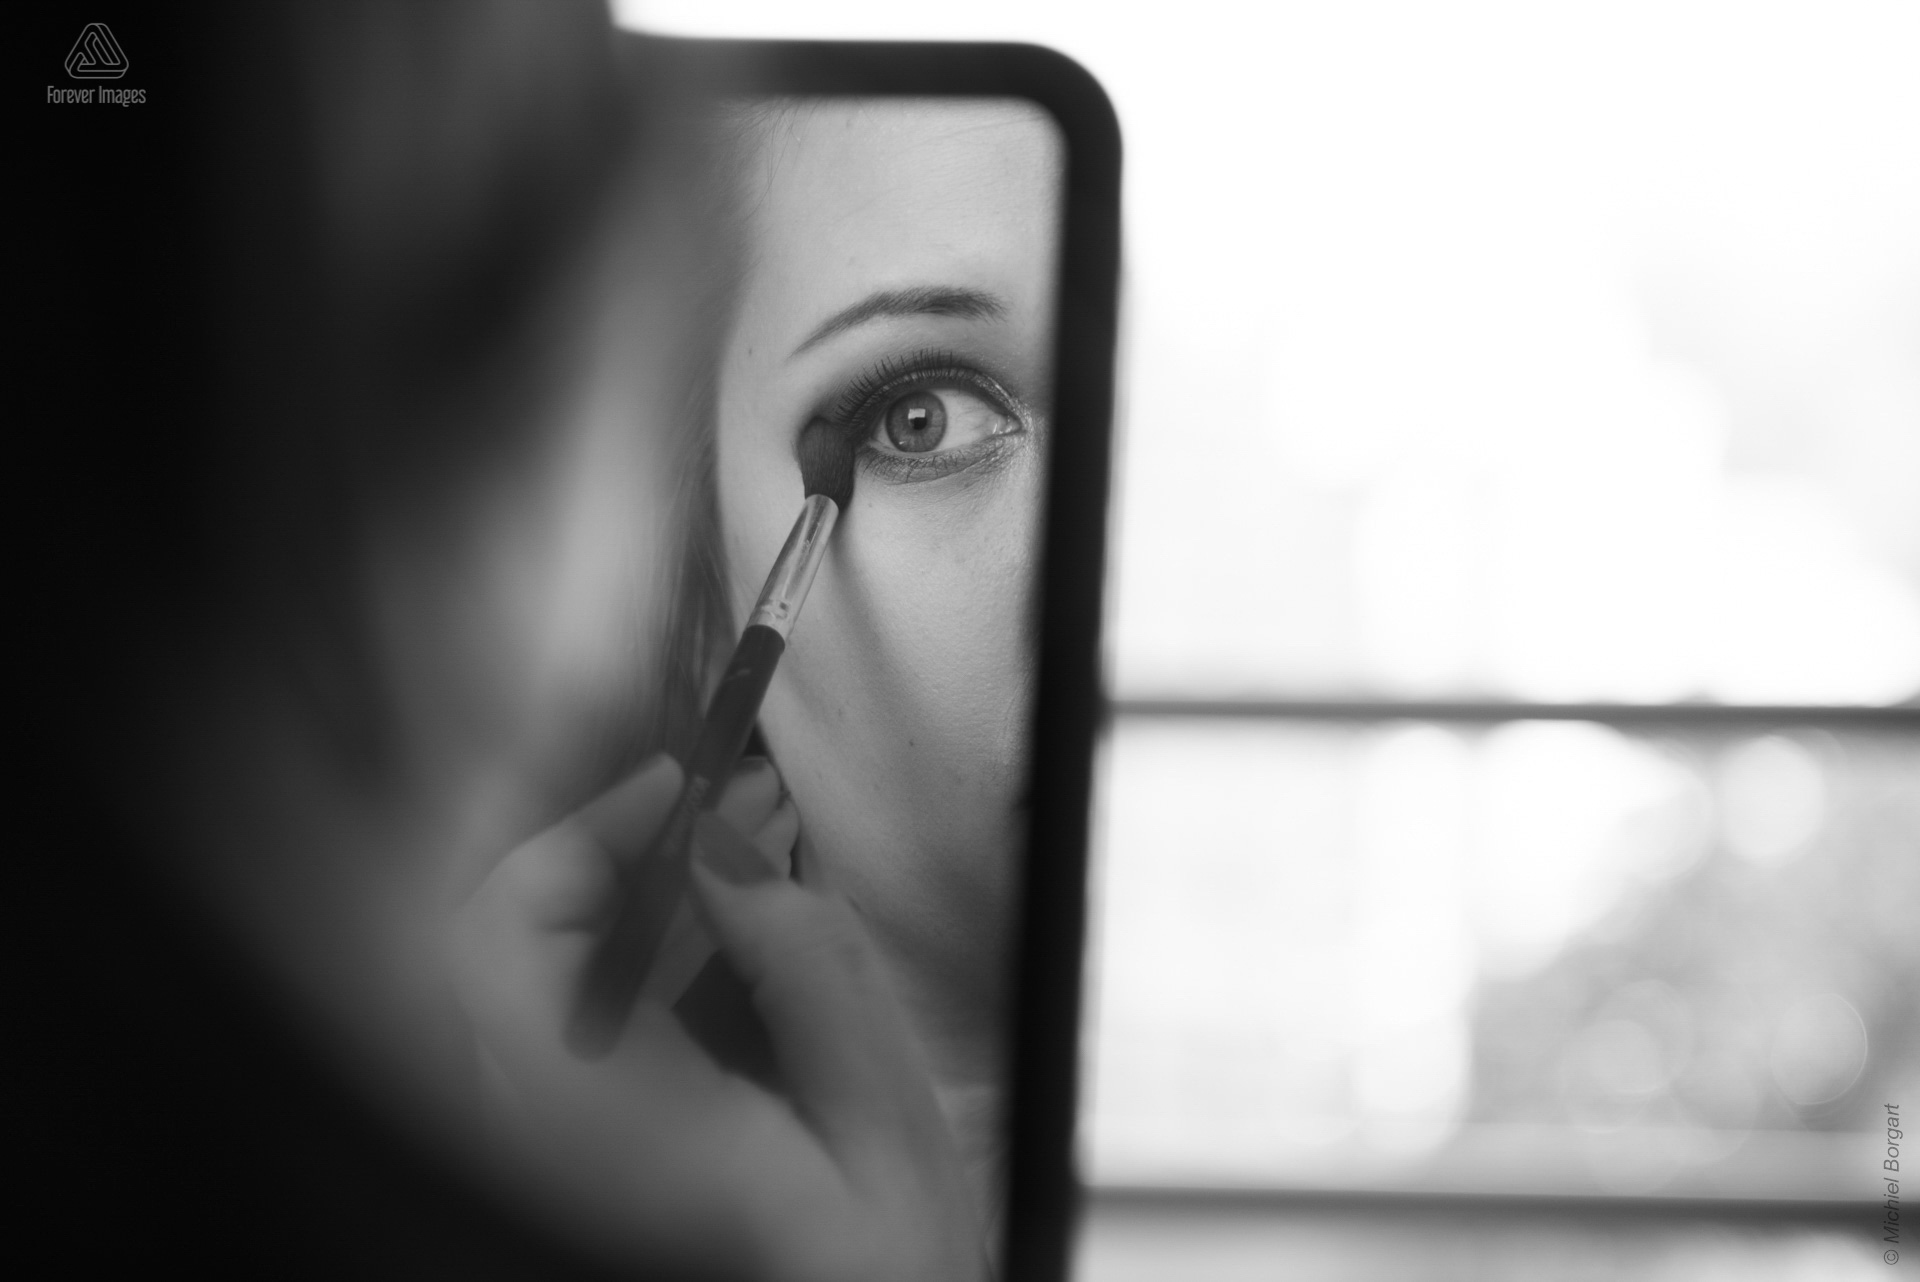 Bruidsfoto zwart-wit opmaken in spiegel | Bruidsfotograaf Michiel Borgart - Forever Images.